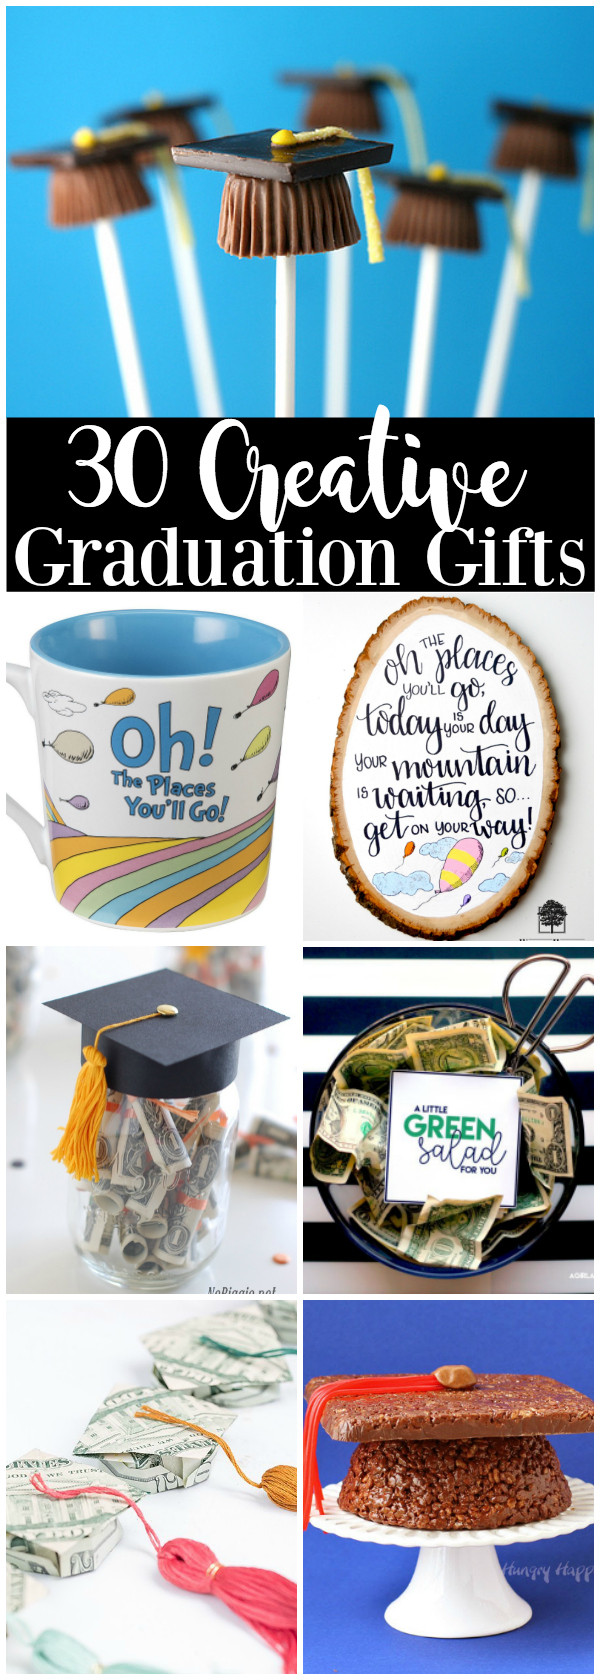 Gift Ideas Graduation
 30 Creative Graduation Gift Ideas